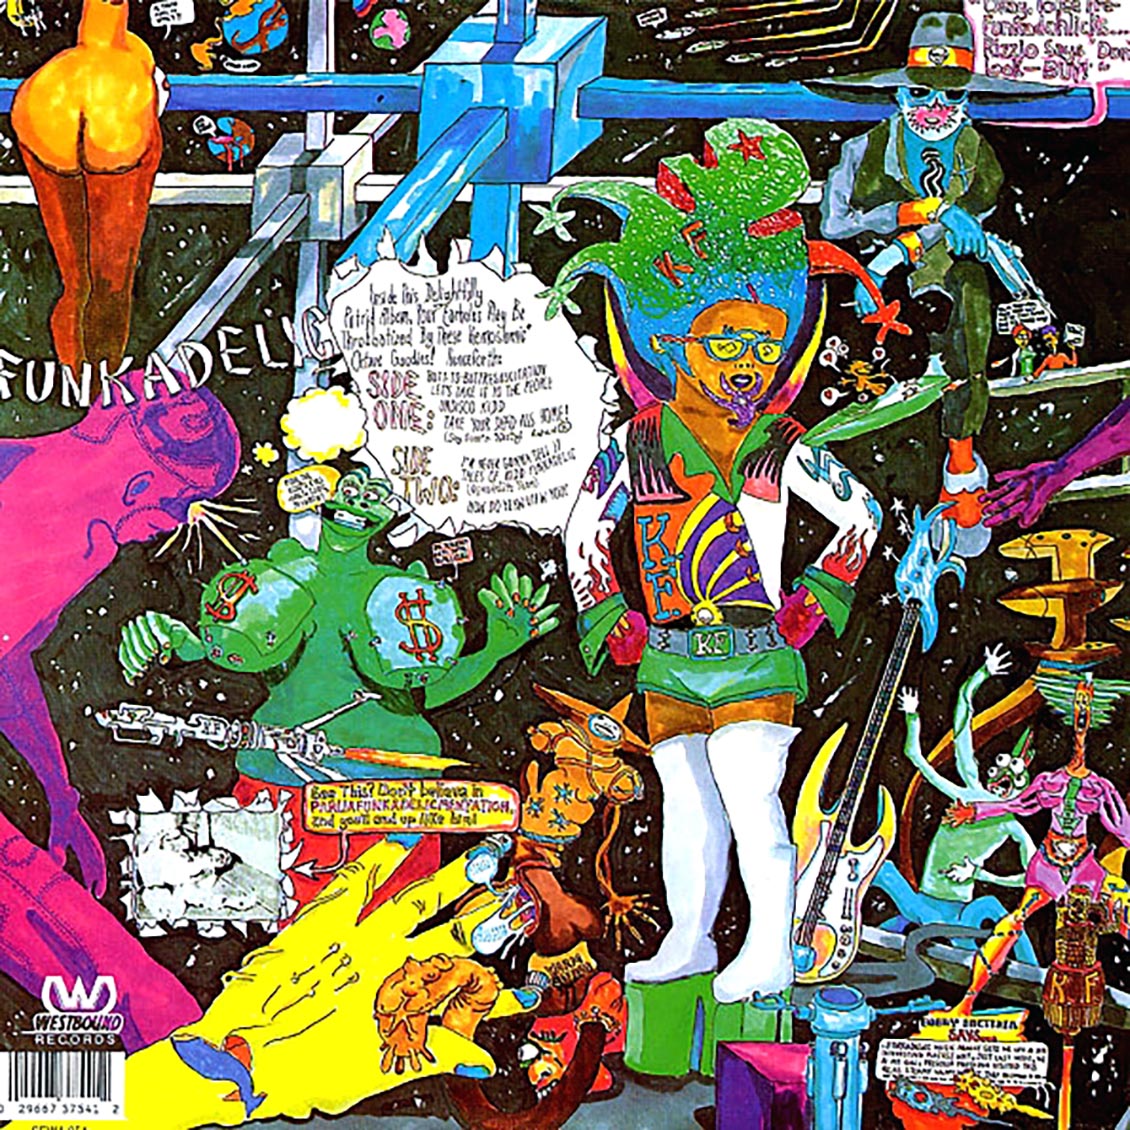 Funkadelic - Tales of Kidd Funkadelic [1992 Reissue] [New Vinyl Record LP]